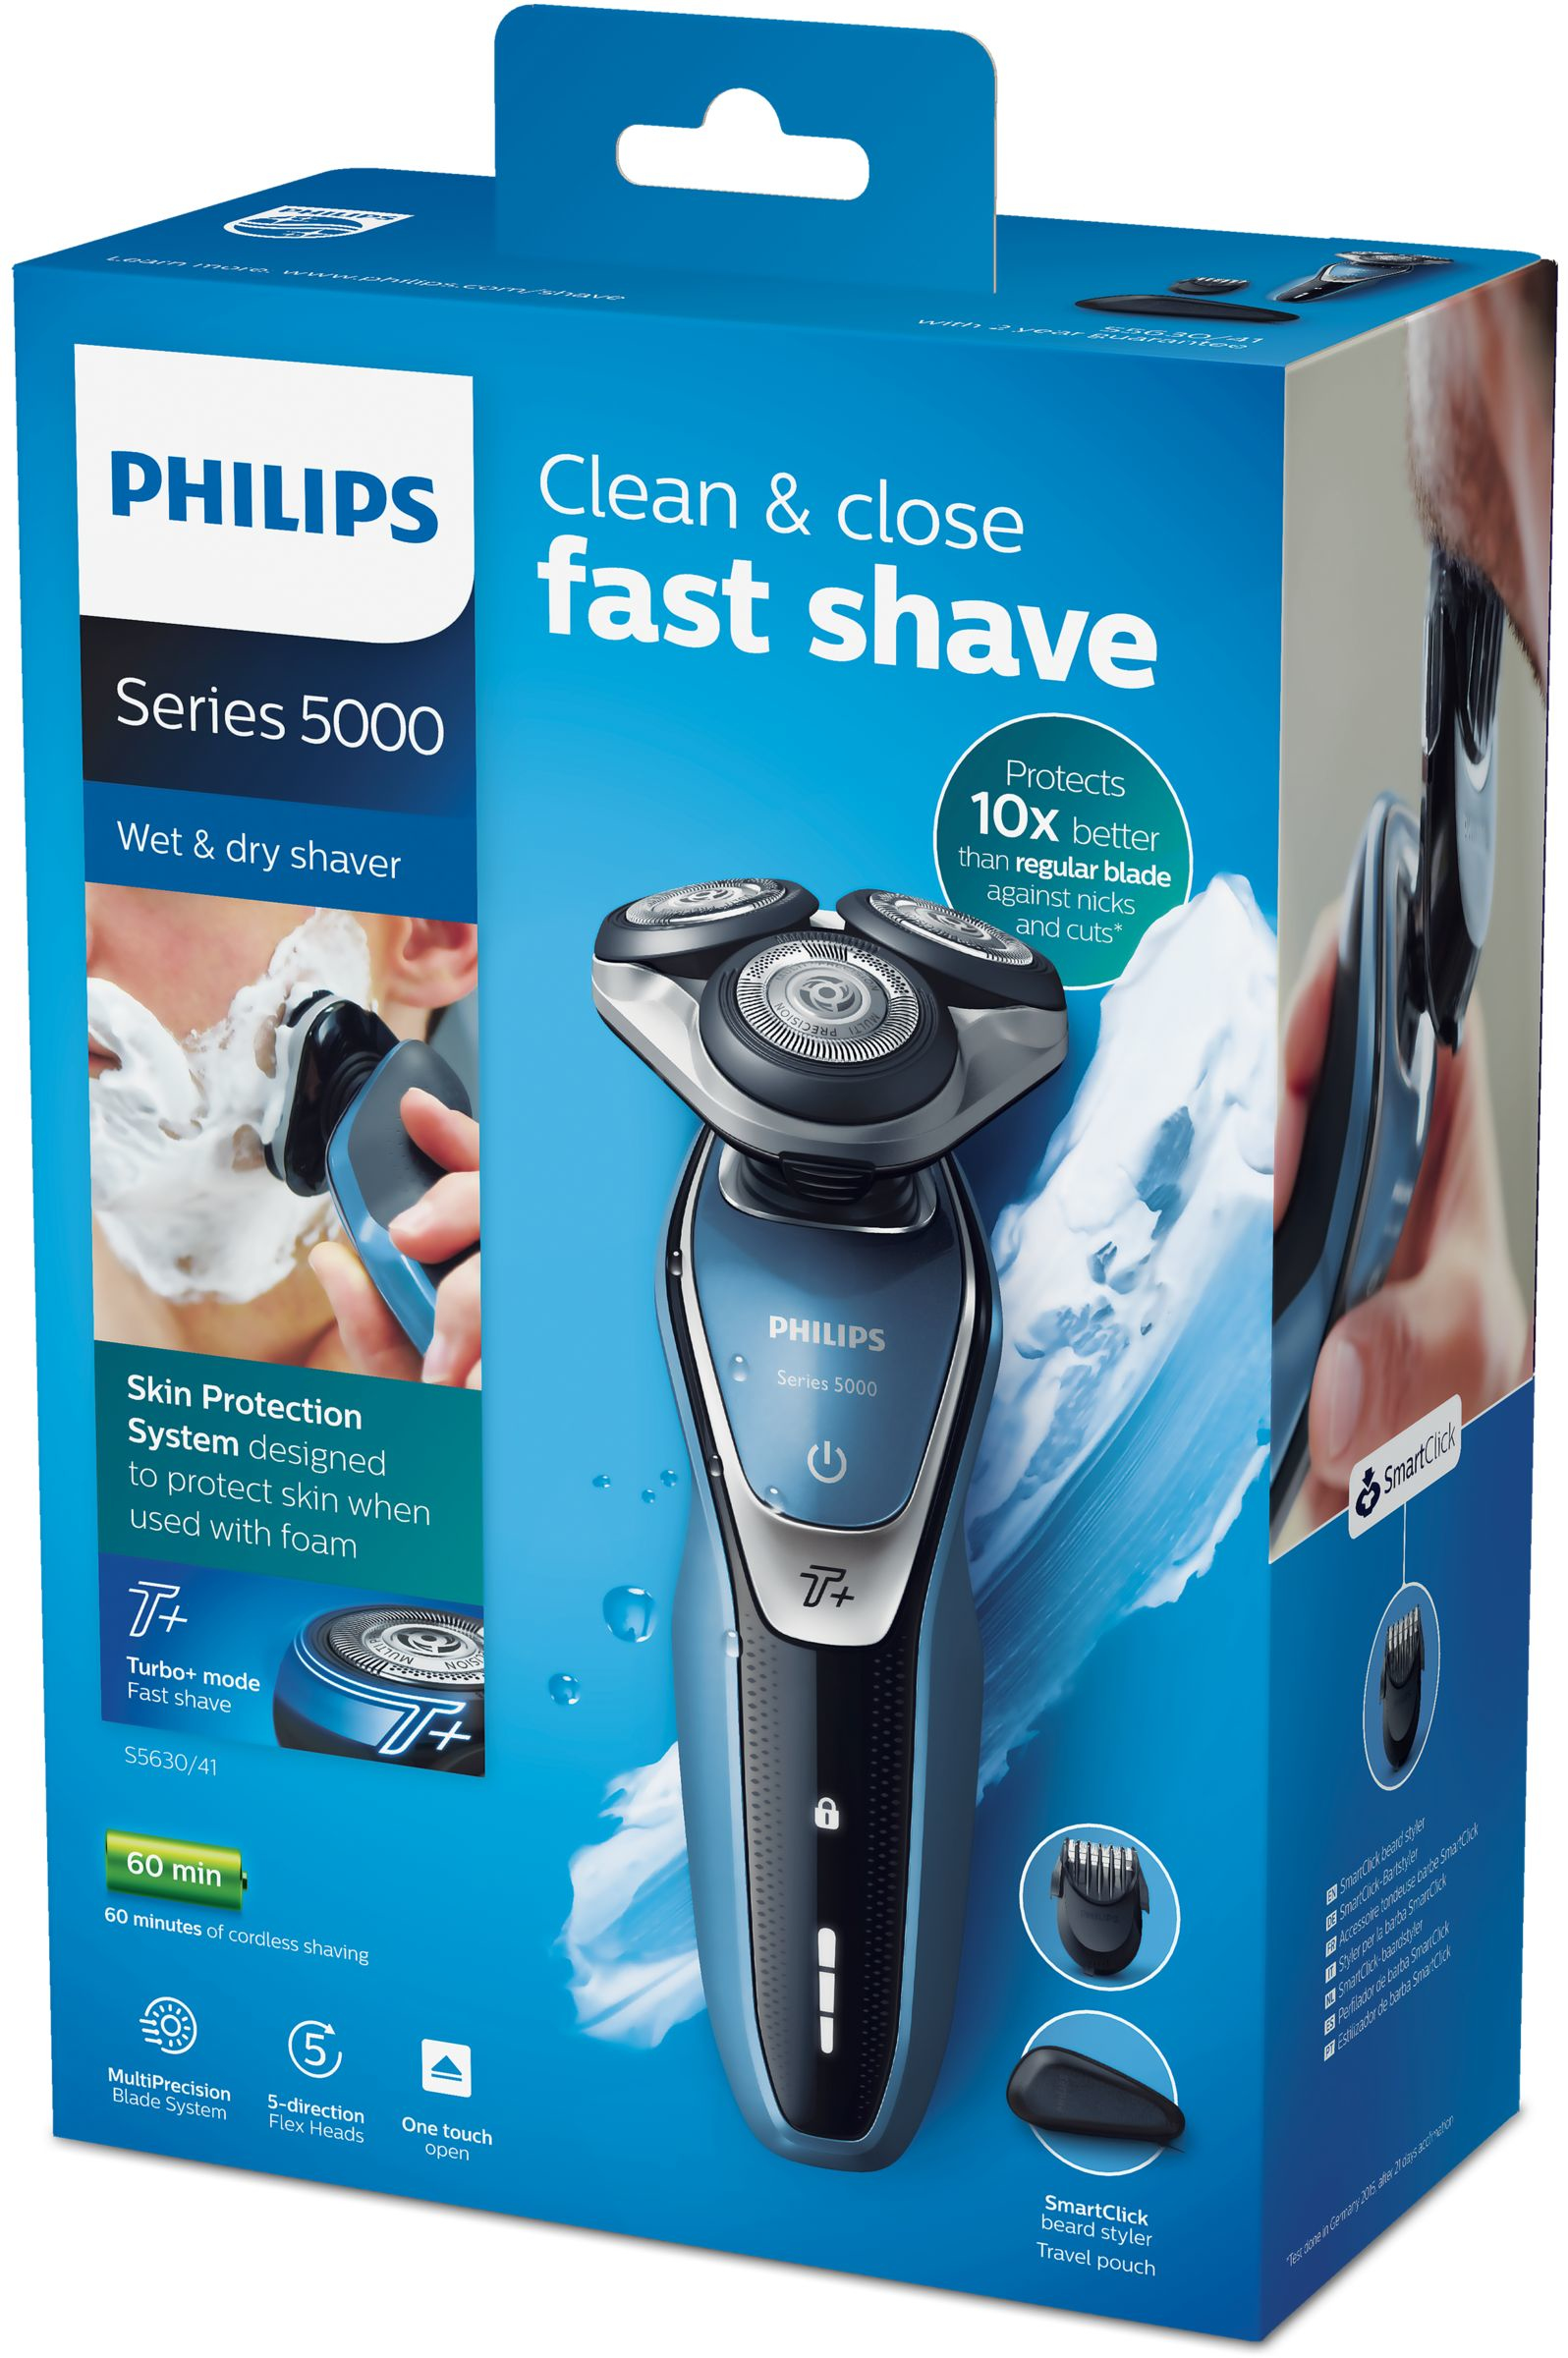 Philips SHAVER Series 5000 Wet & Dry S5630/41